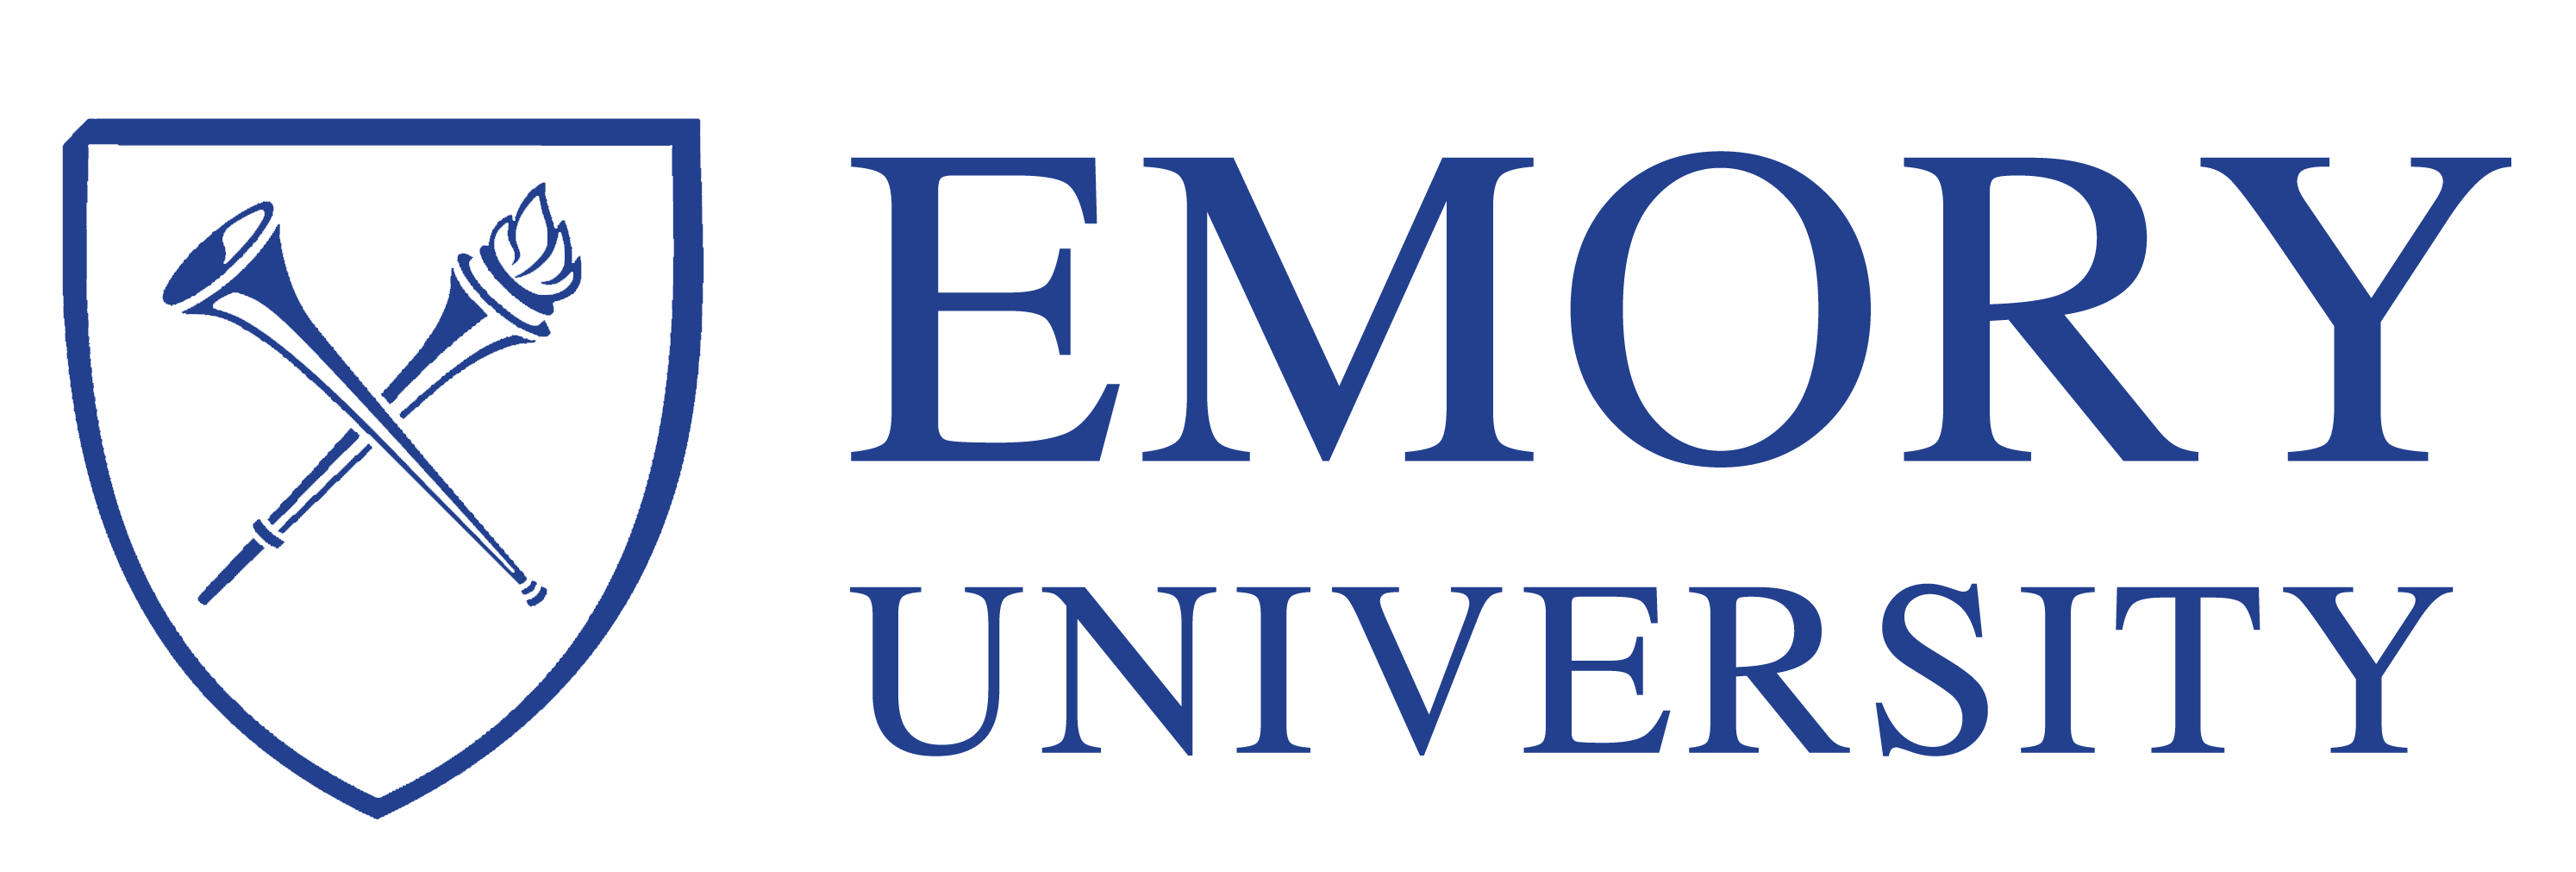 Partner announcement: Emory University